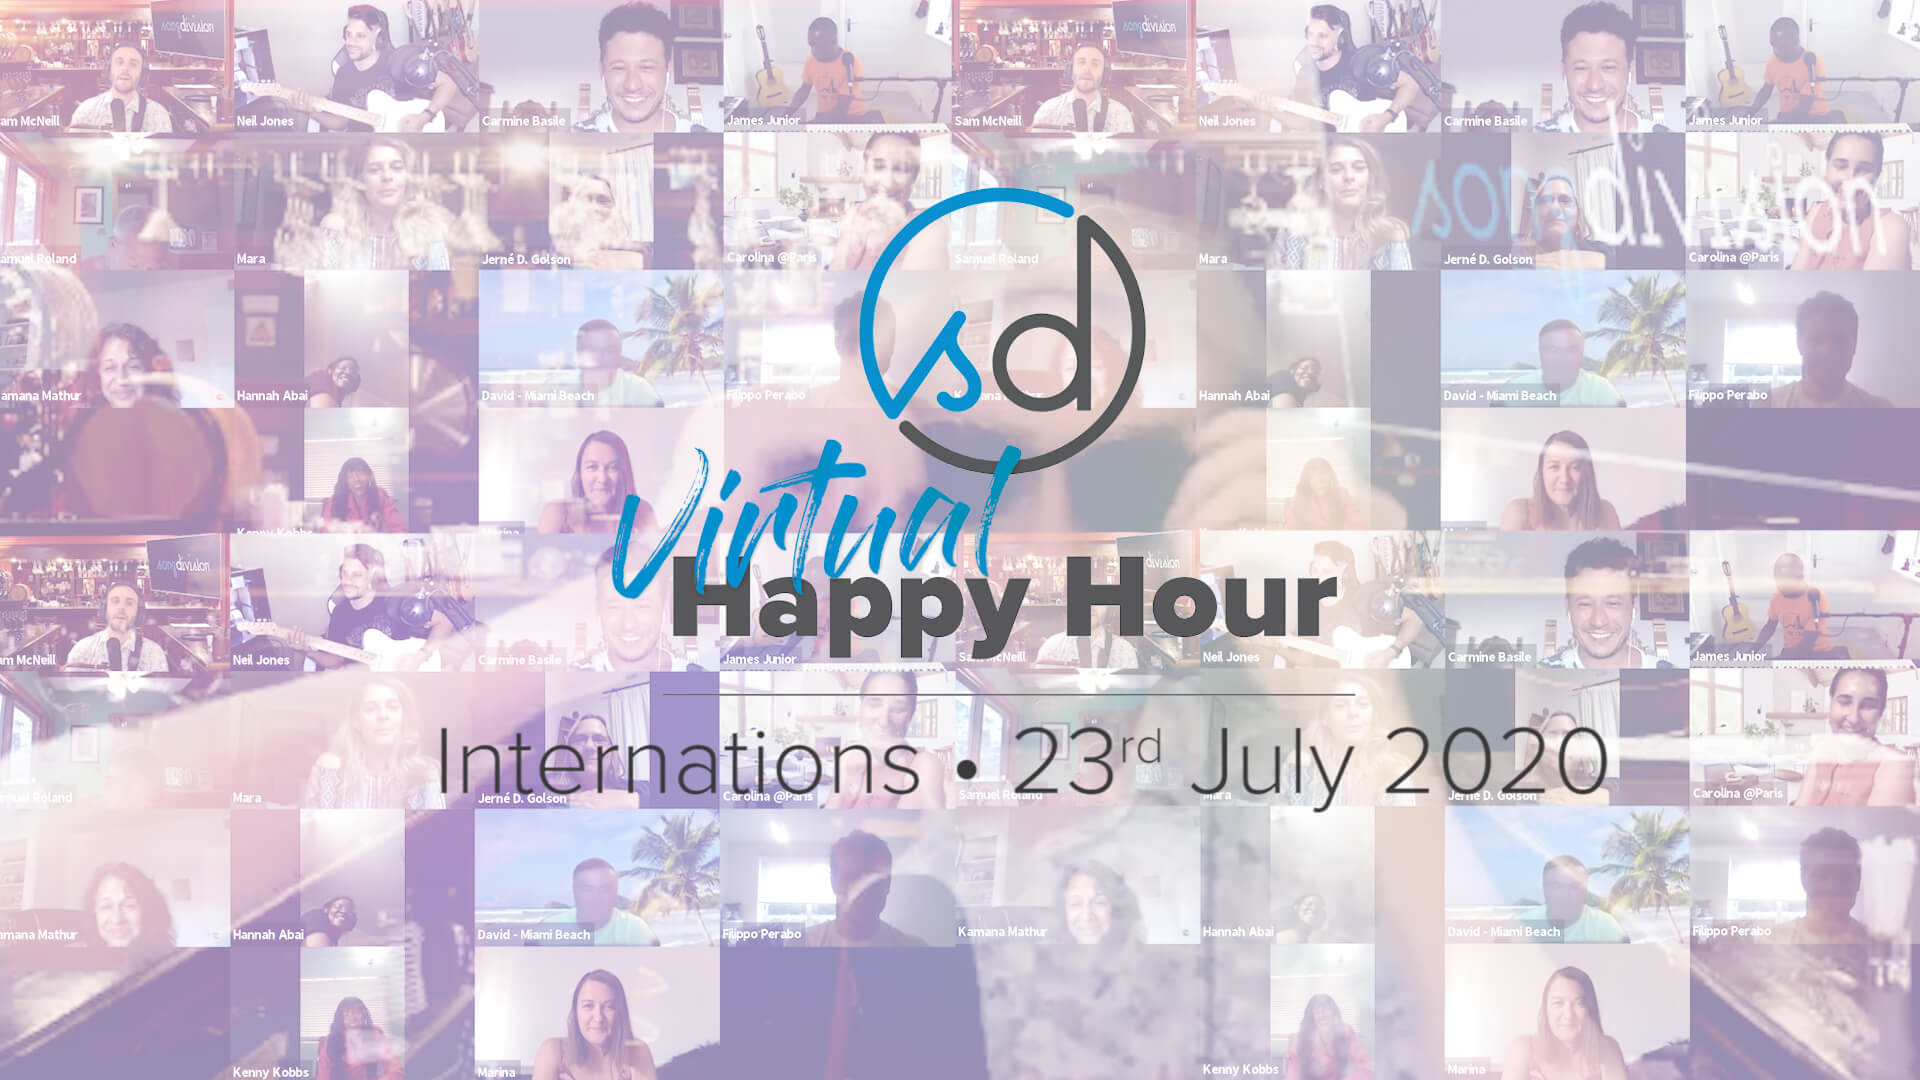 Internations + Virtual Happy Hour